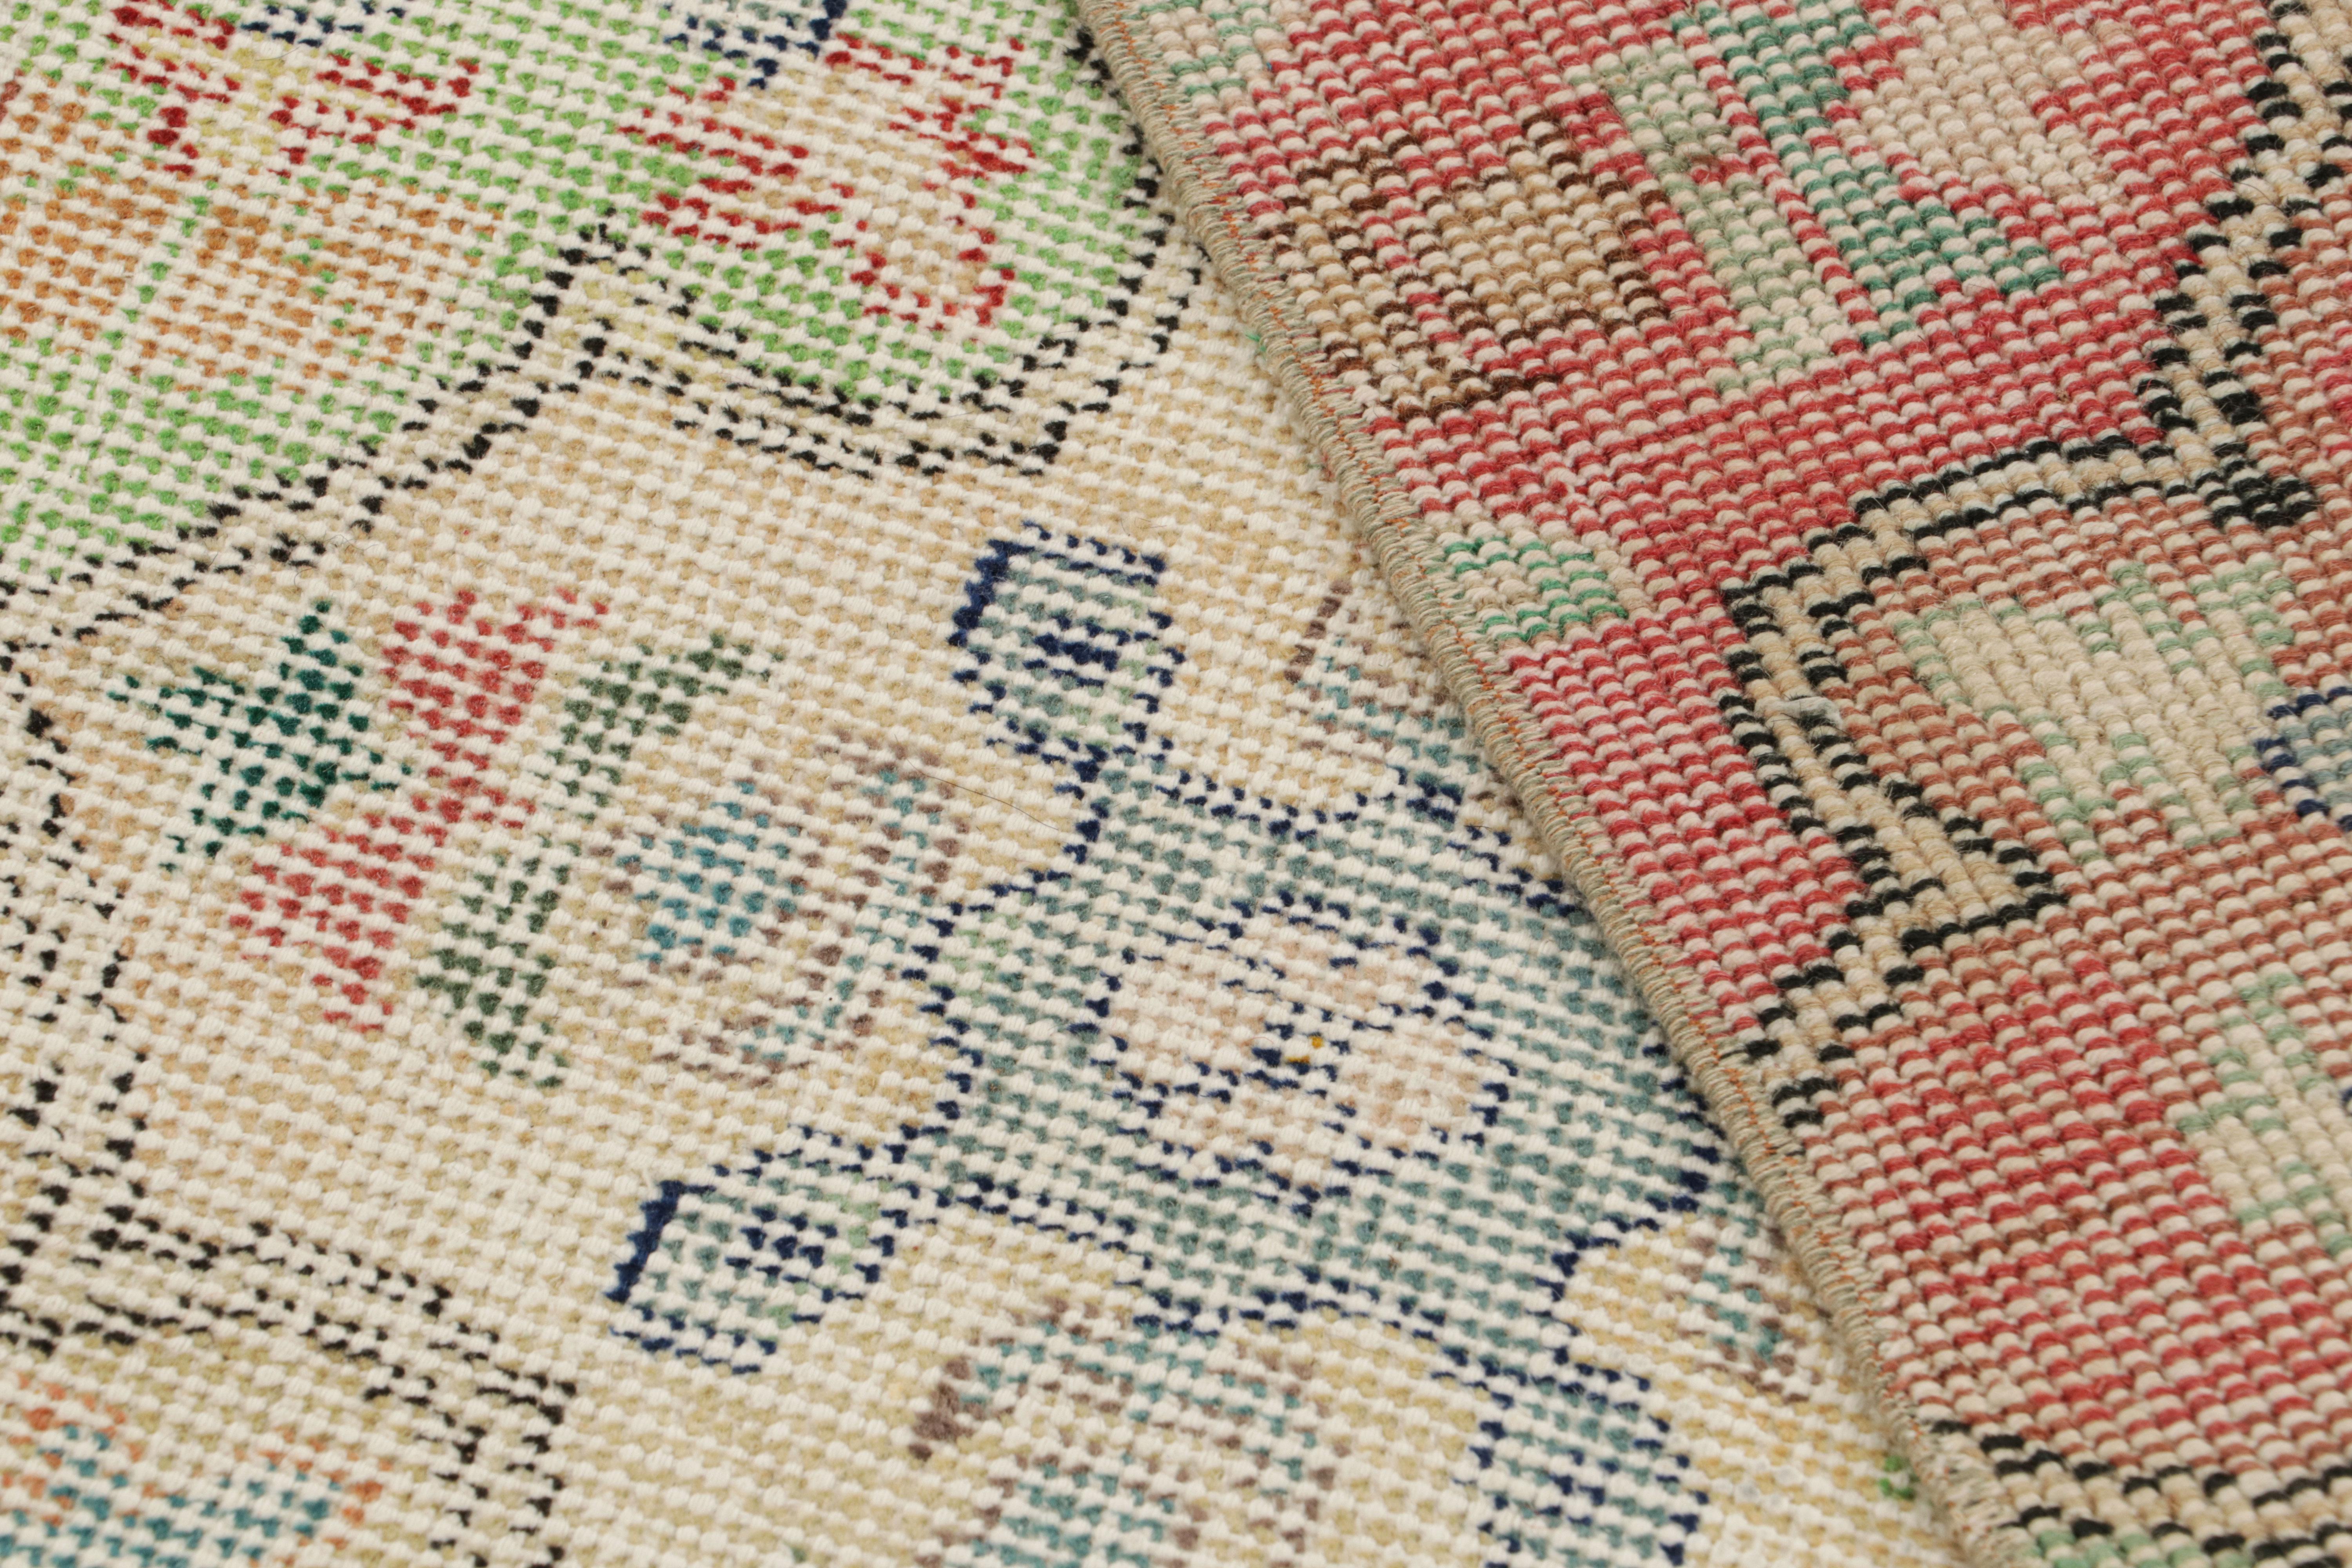 Wool Vintage Zeki Müren Rug, with Geometric Floral Patterns, from Rug & Kilim For Sale